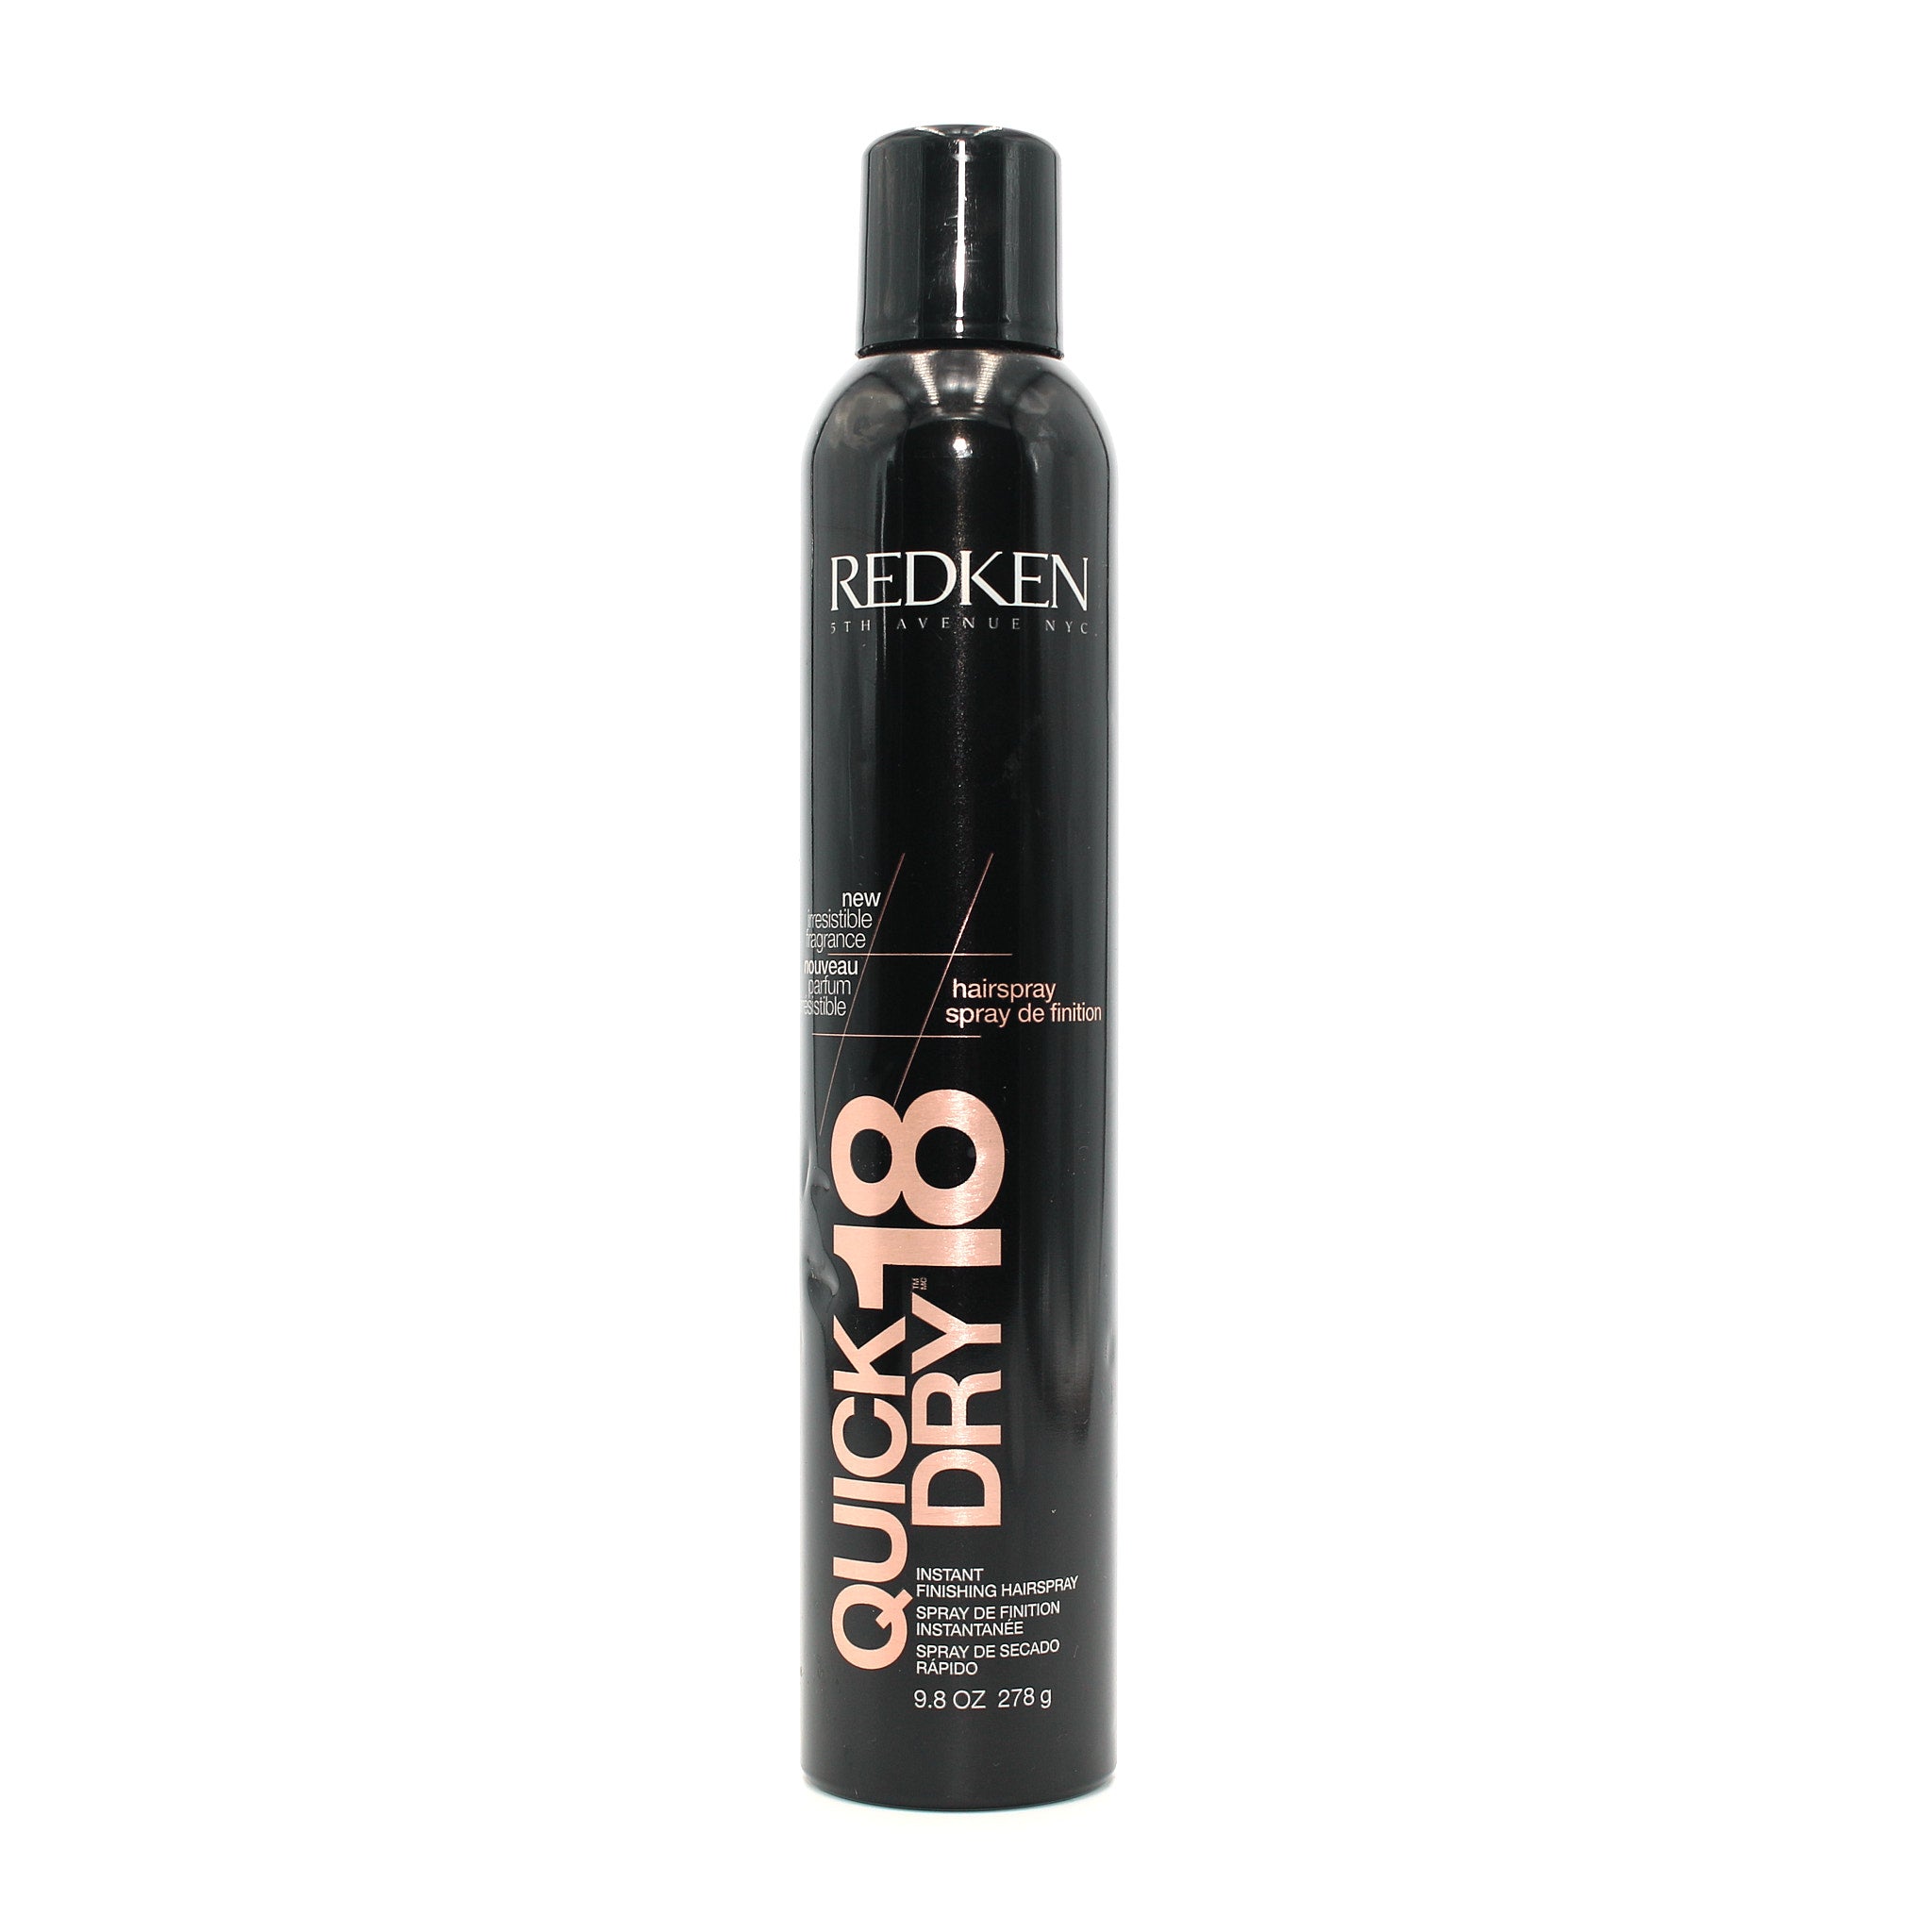 REDKEN 18 Quick Dry Instant Finishing Hairspray 9.8 oz